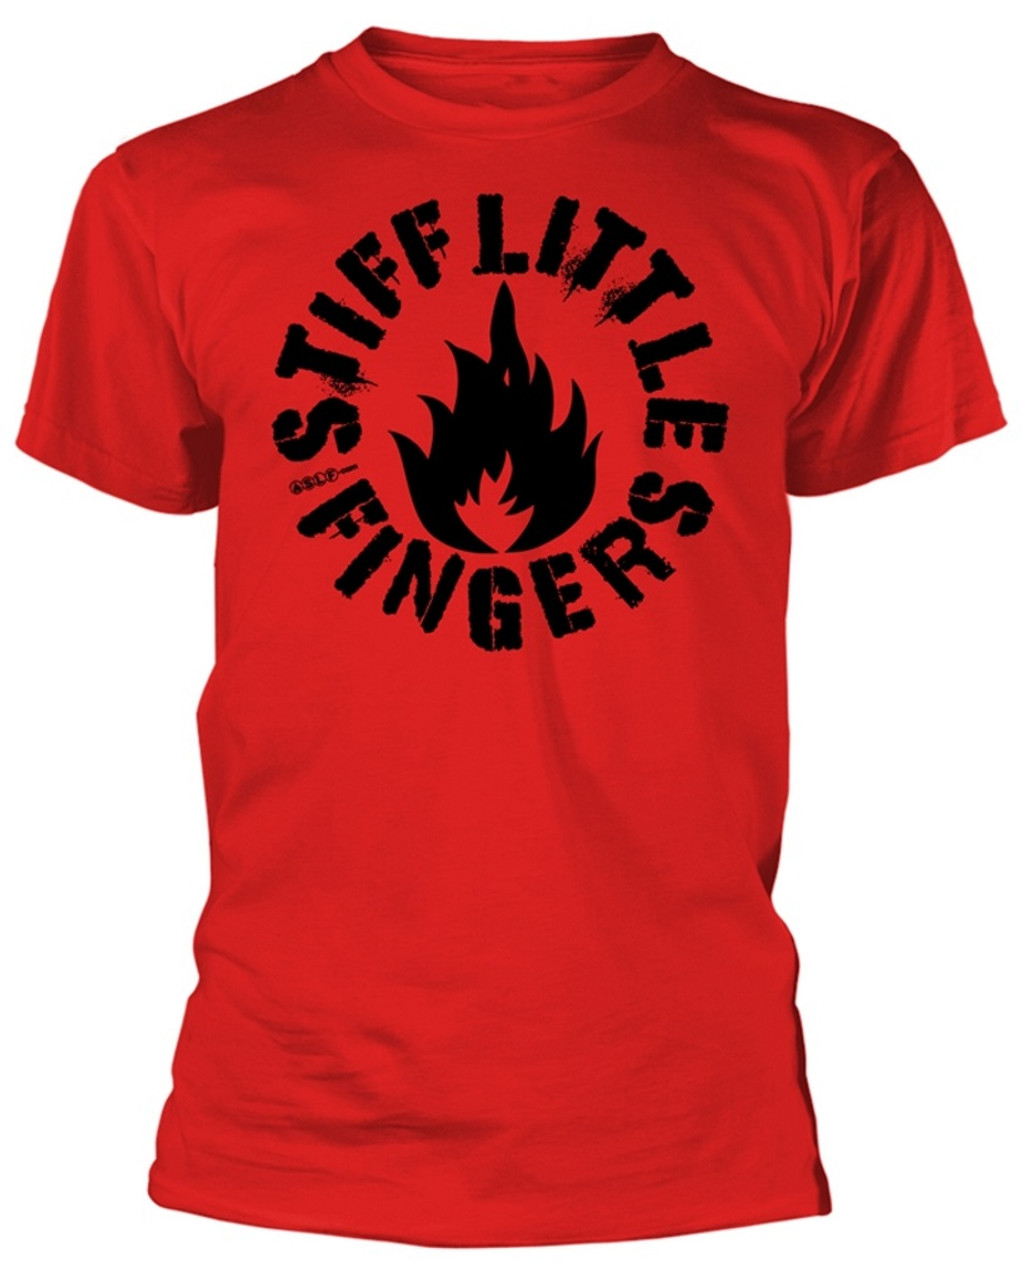 Stiff Little Fingers 'Punk' (Red) T-Shirt